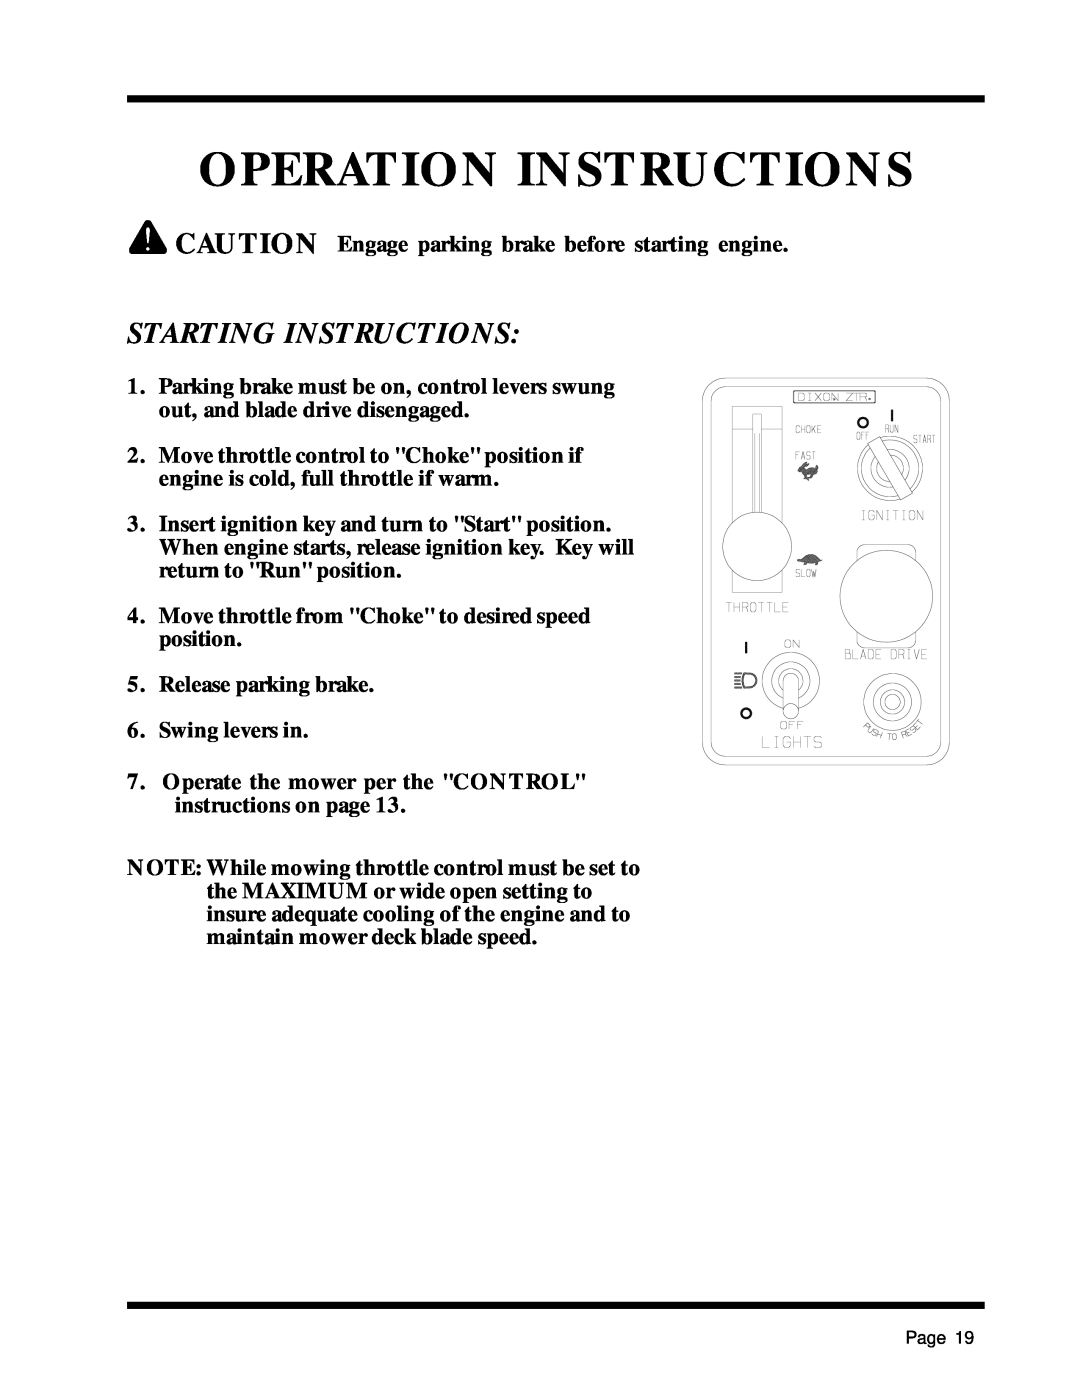 Dixon 1857-0599 manual Starting Instructions, Operation Instructions 